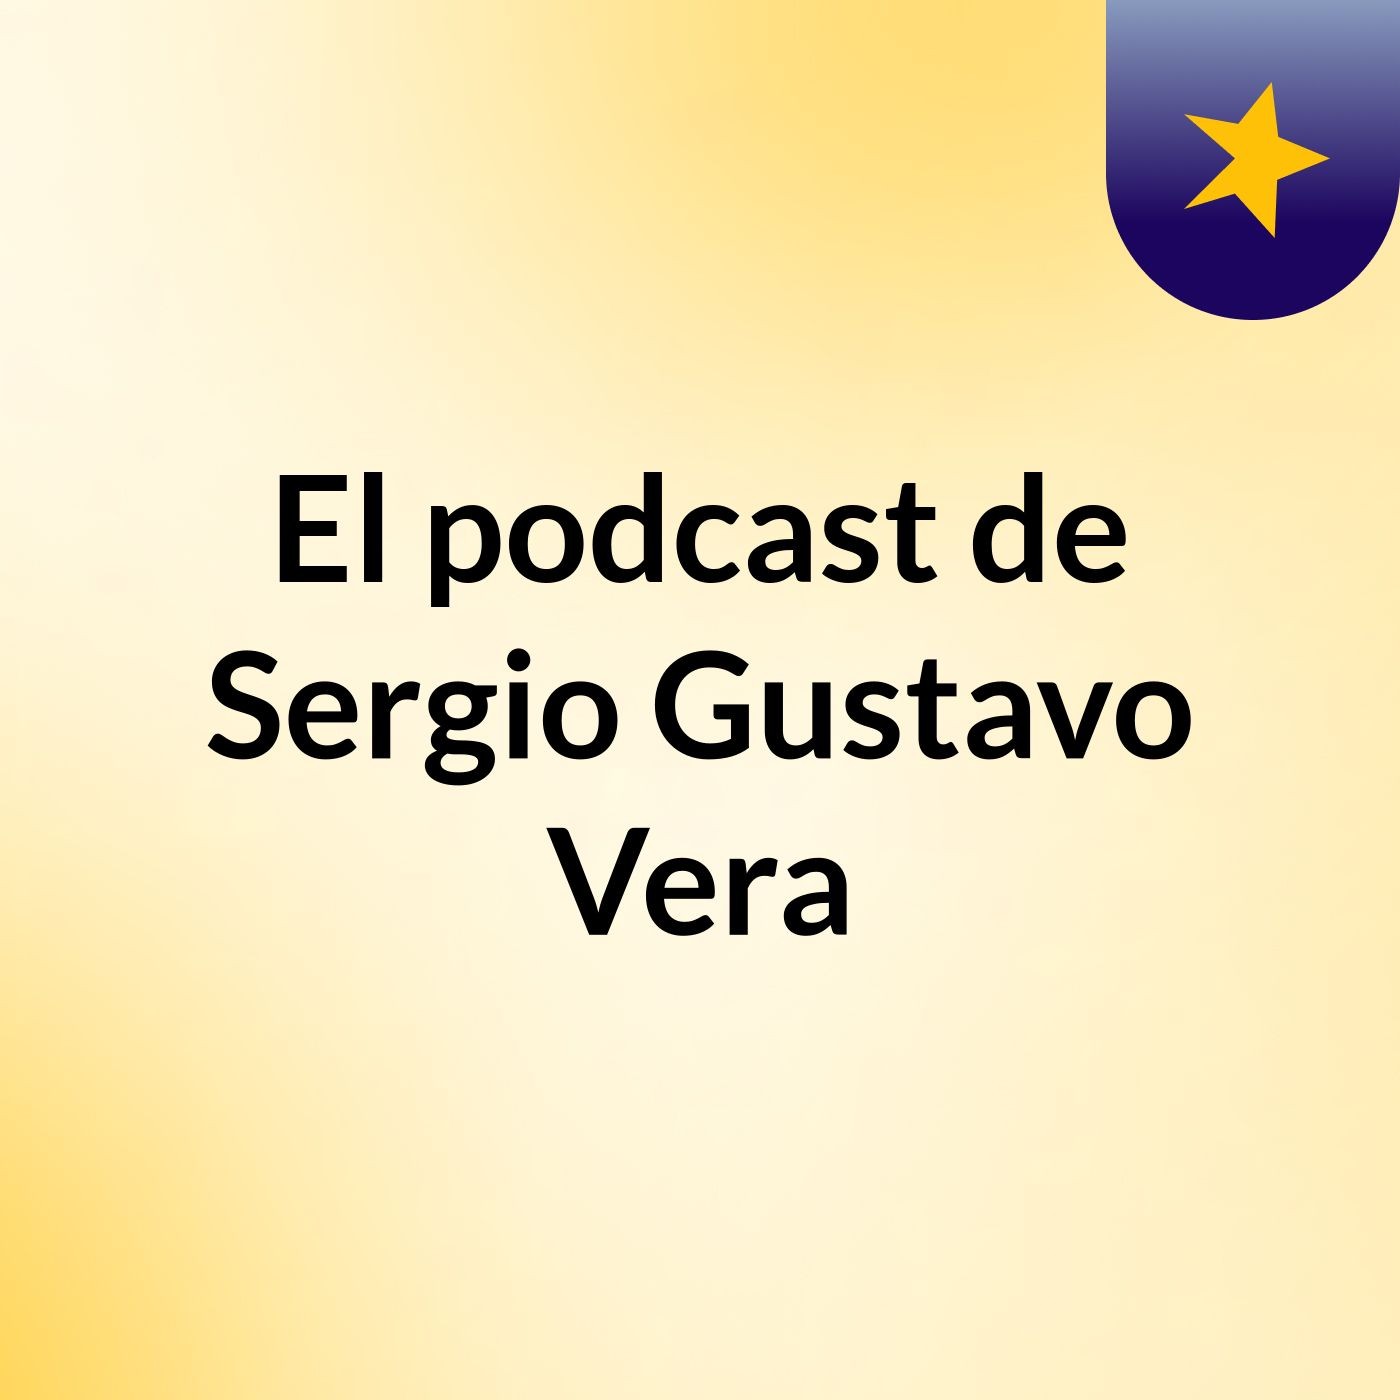 Episodio 2 - El podcast de Sergio Gustavo Vera